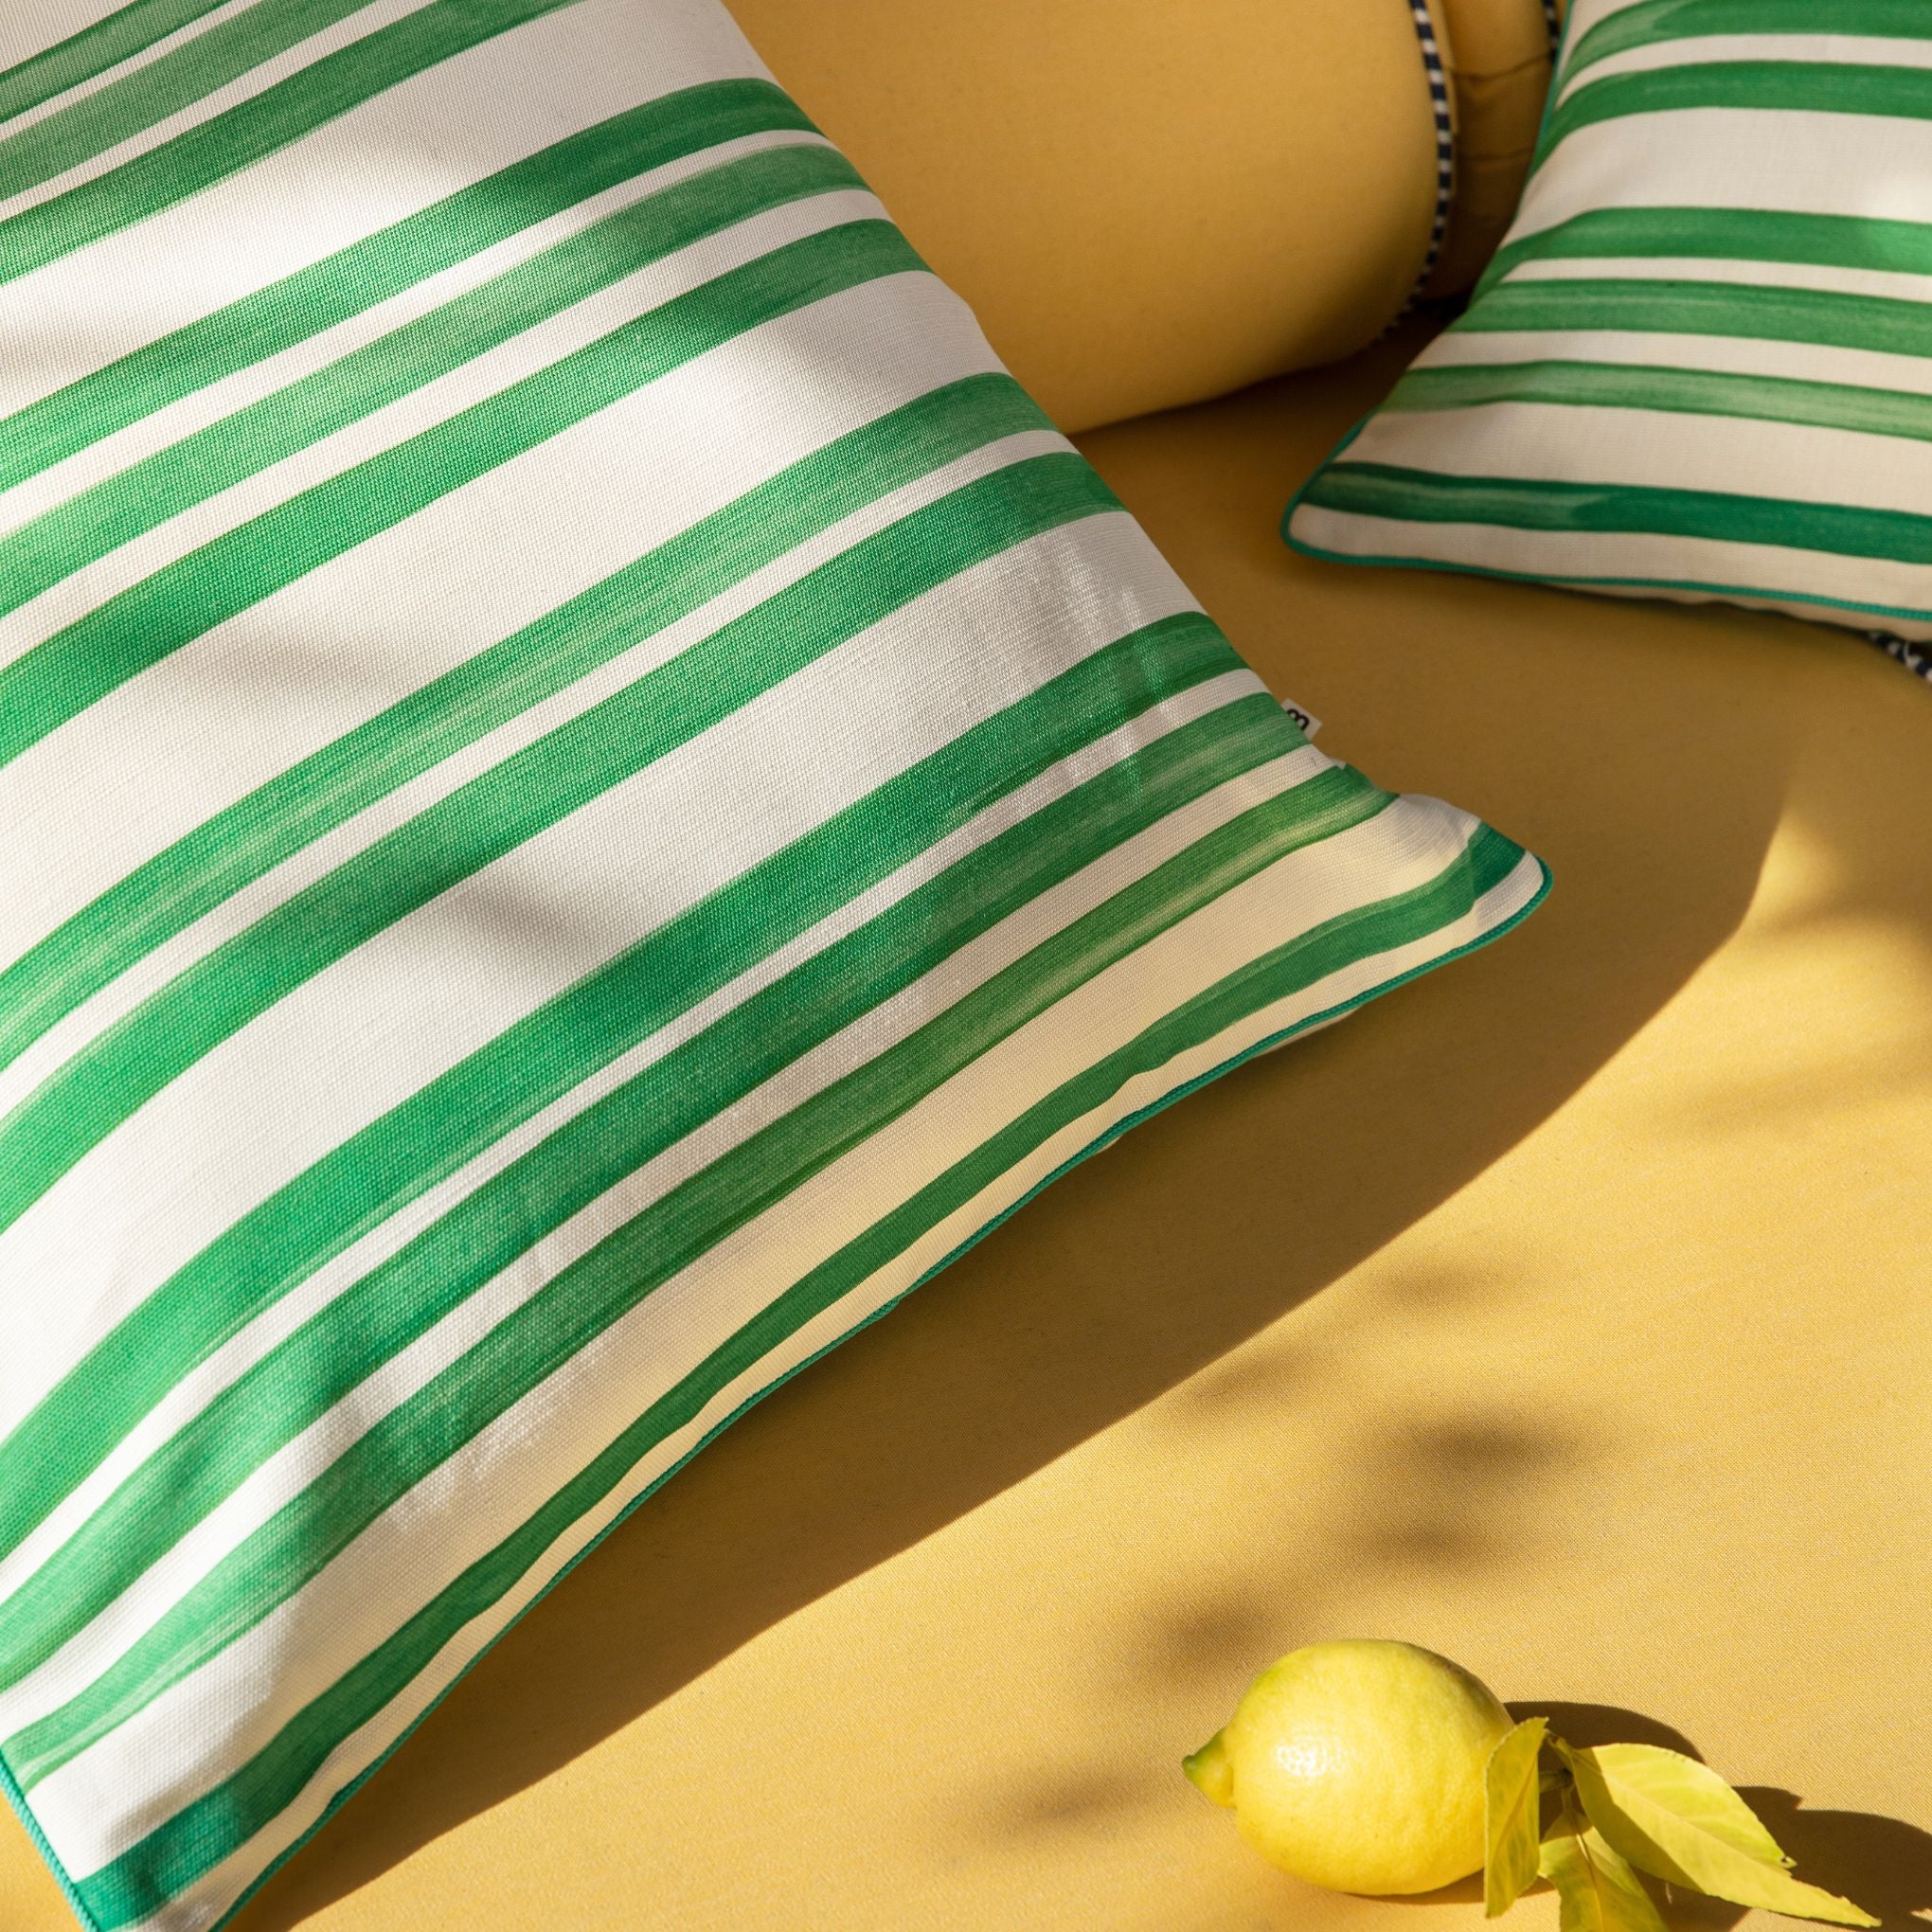 Stripe Green 60cm Outdoor Cushion